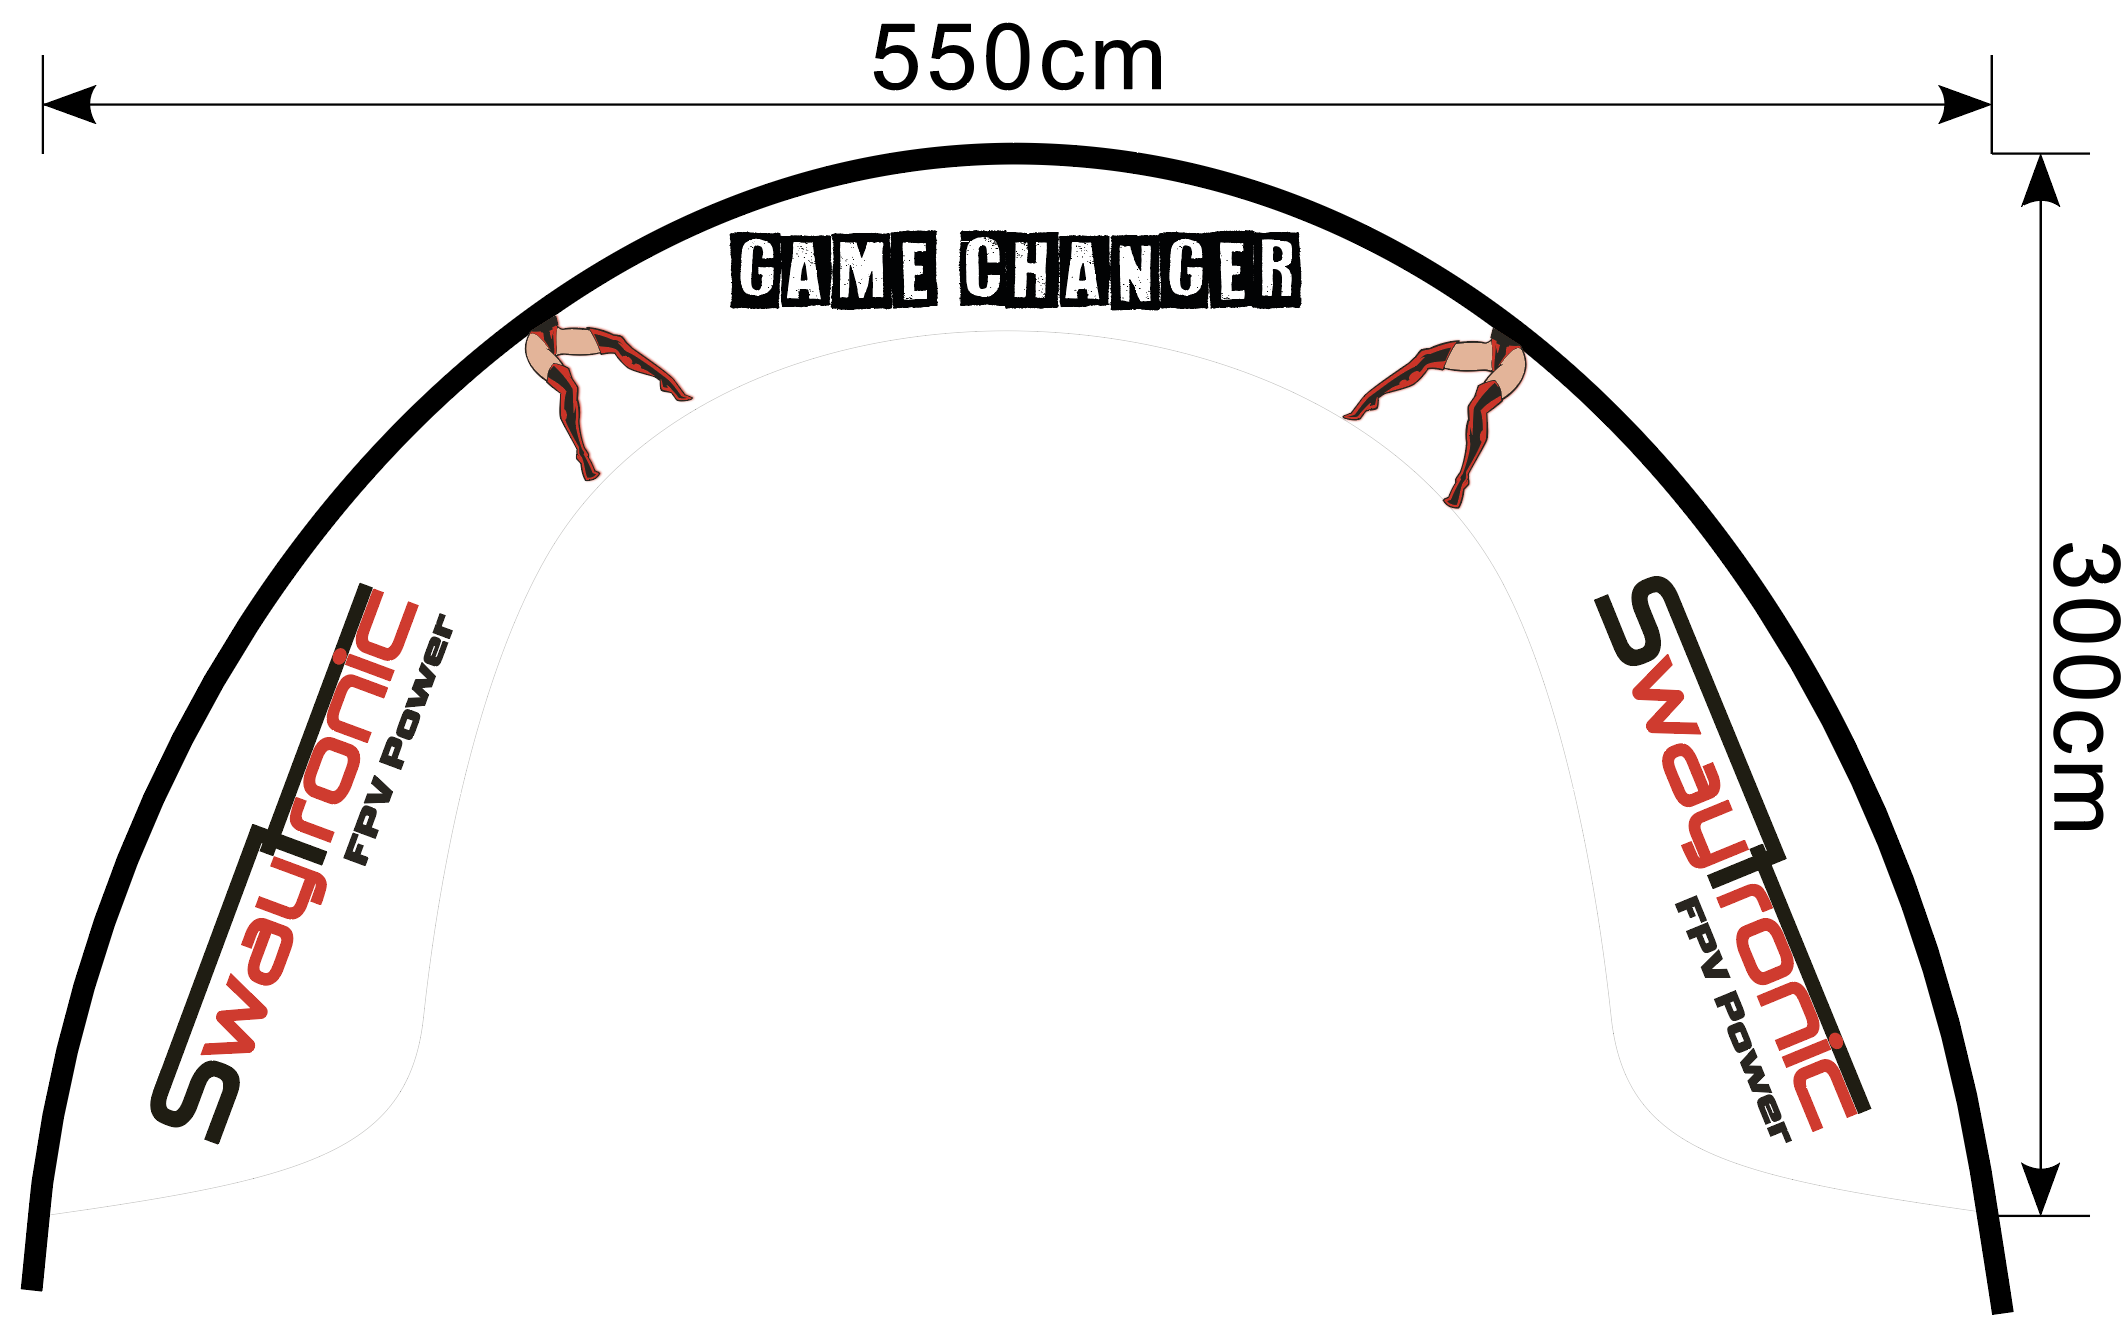 SWAYTRONIC FPV - Gate 550 x 300 GAME CHANGER Set